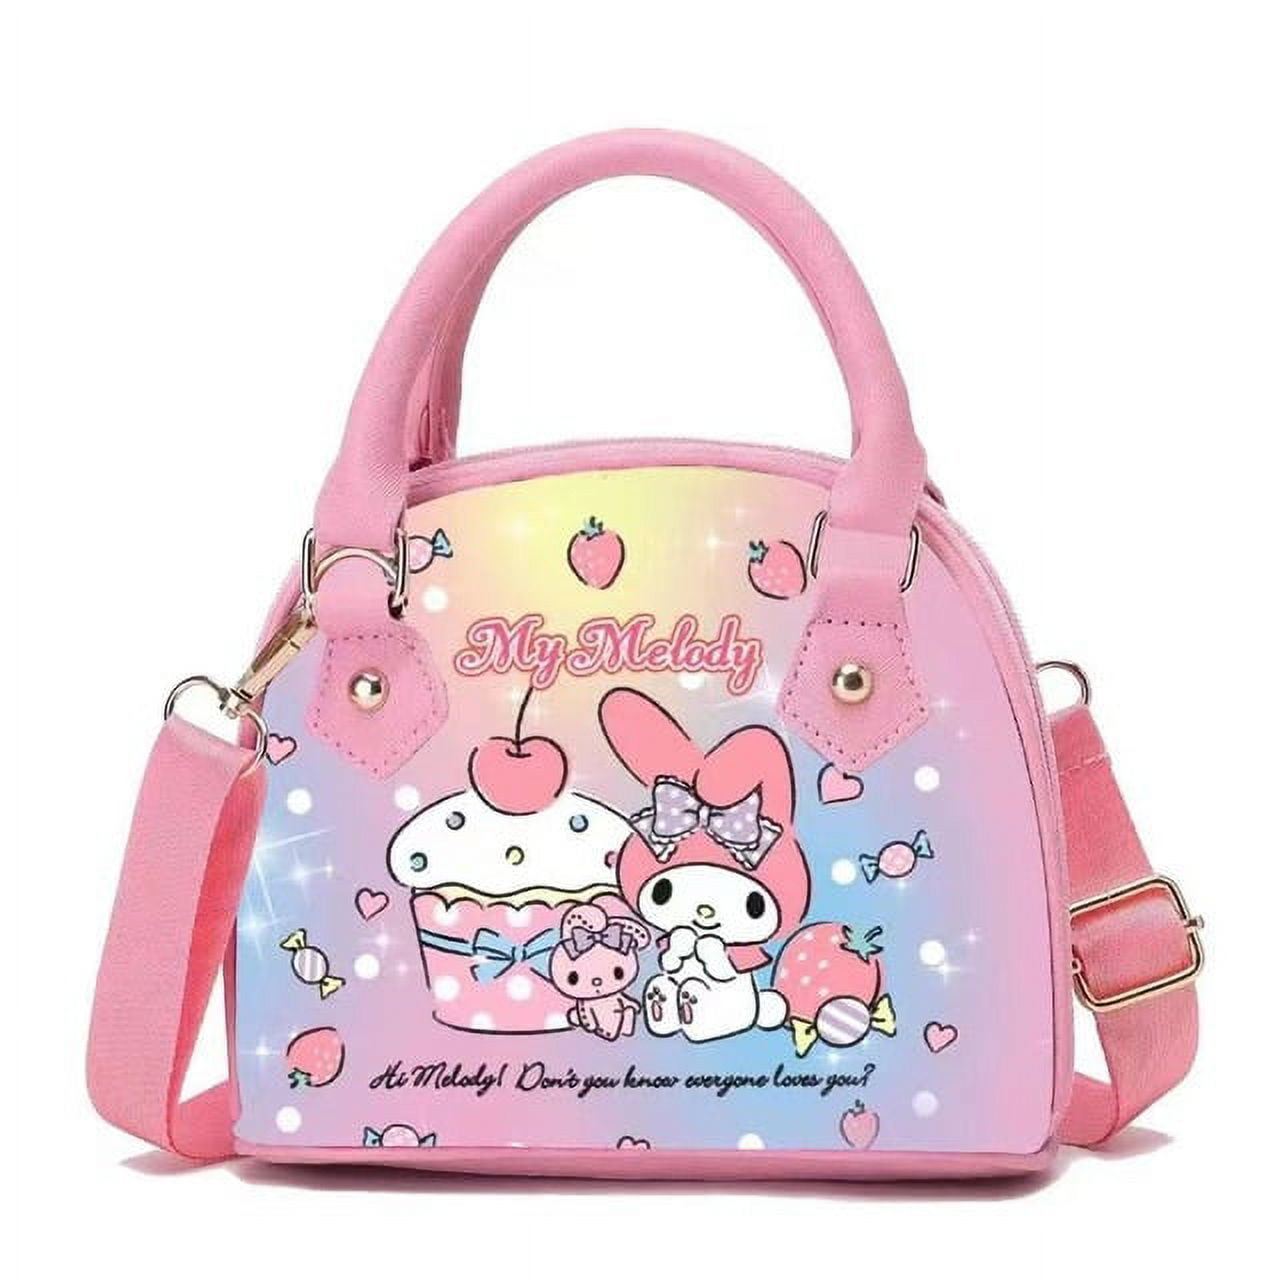 Cute Girl Hello Kitty Wallet Purse Clutch Card Holder Handbag 6